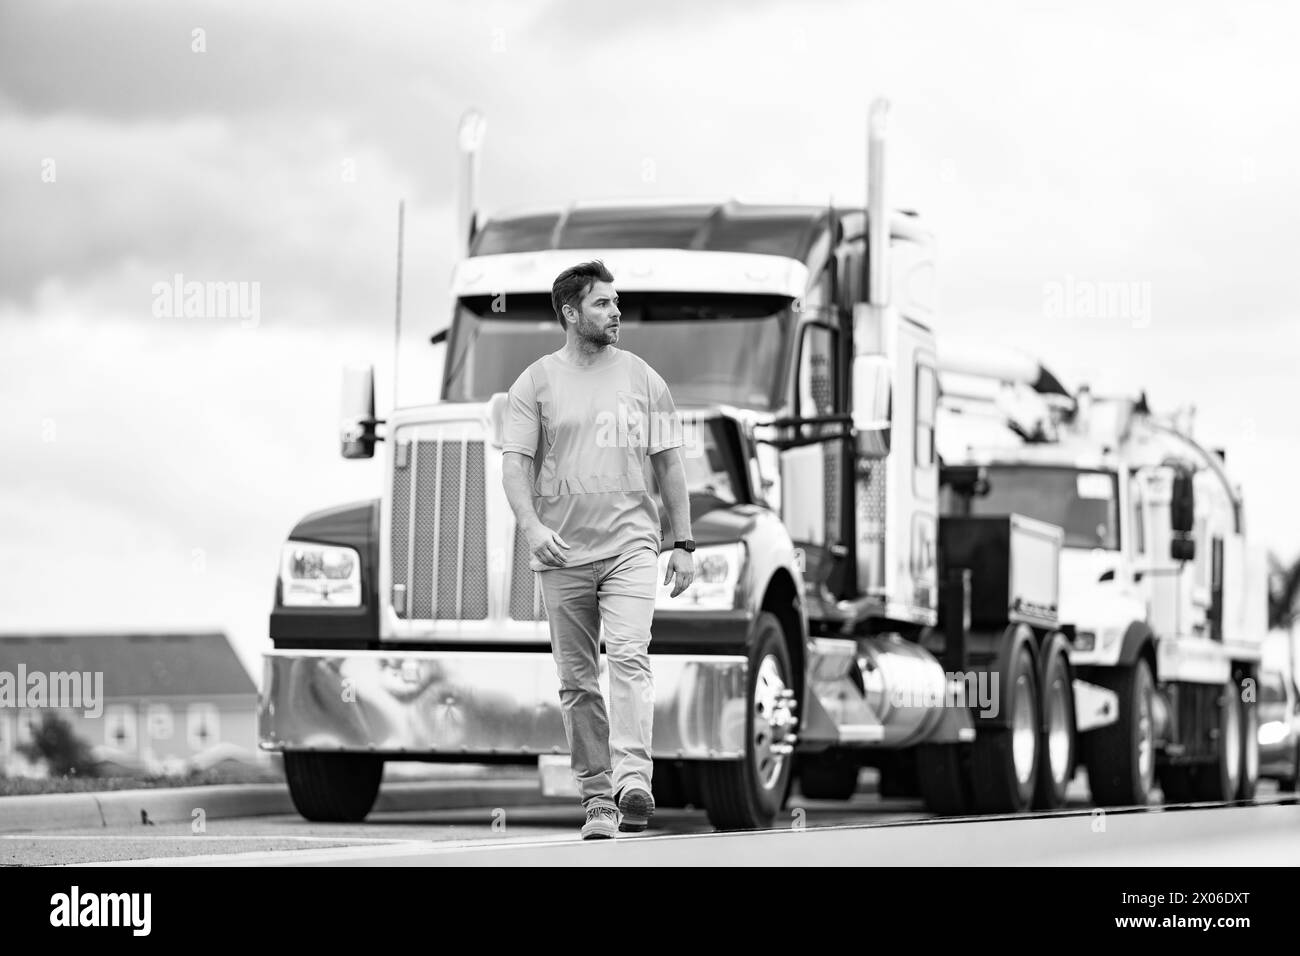 Highway engineer walking on highway. Man wearing safety vest for traffic work. Highway engineering Stock Photo